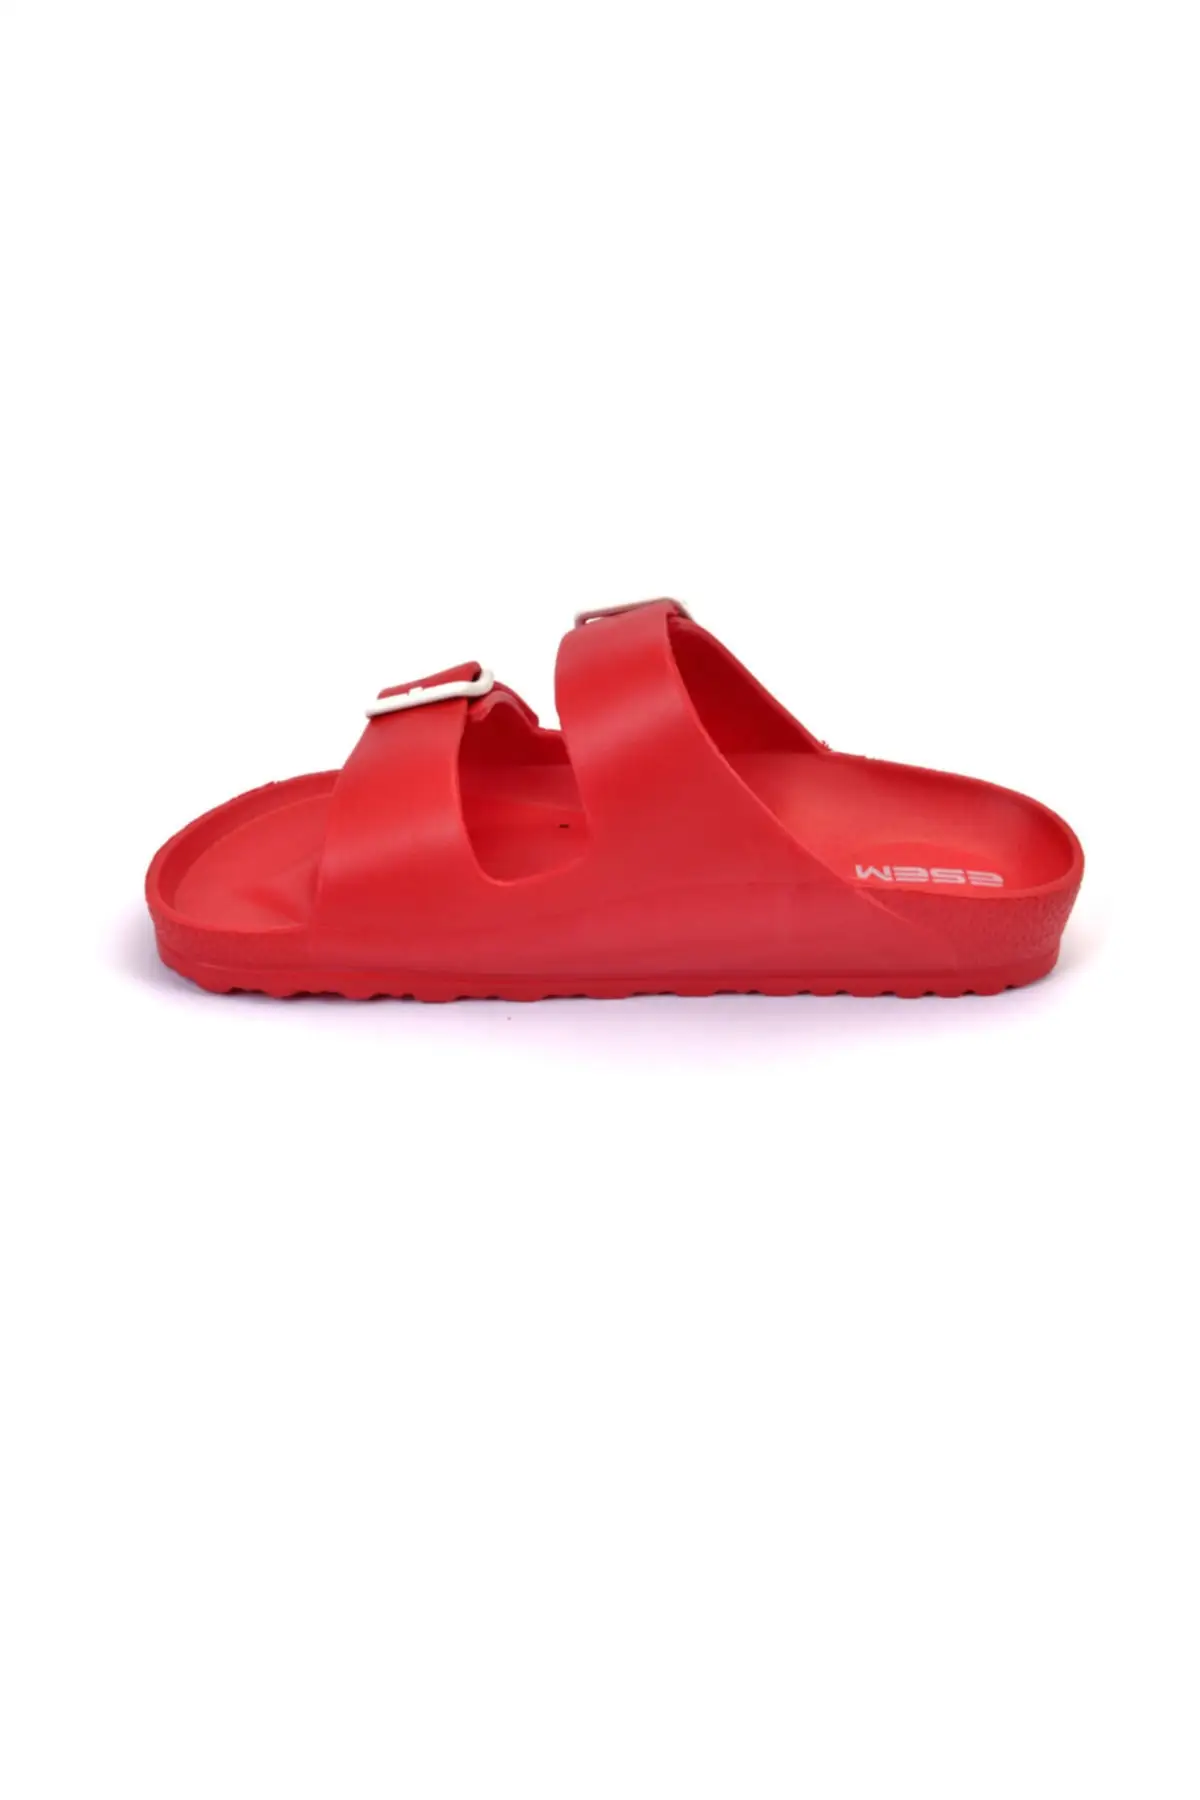 

Women Sandals Esm. z red Fashion Summer Slipper Indoor Outdoor Flip Flops Beach Shoes Female Slippers Platform Casual